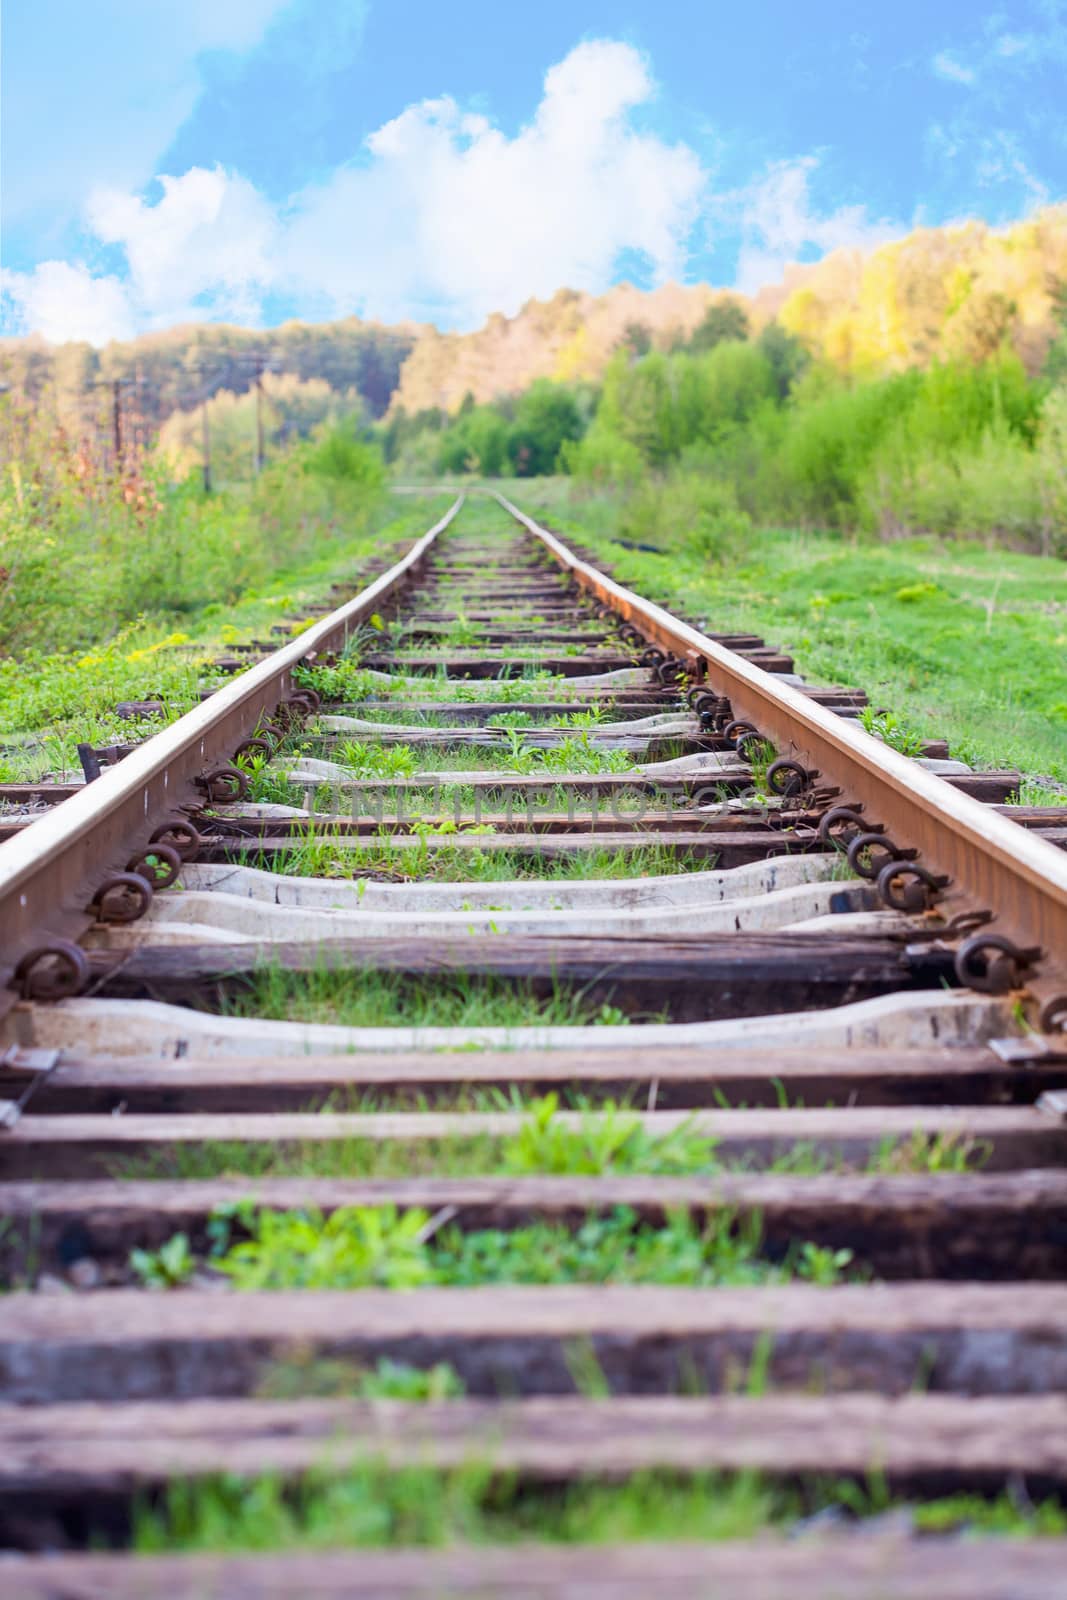 railway tracks in a rural scene with nice blue sky by sfinks